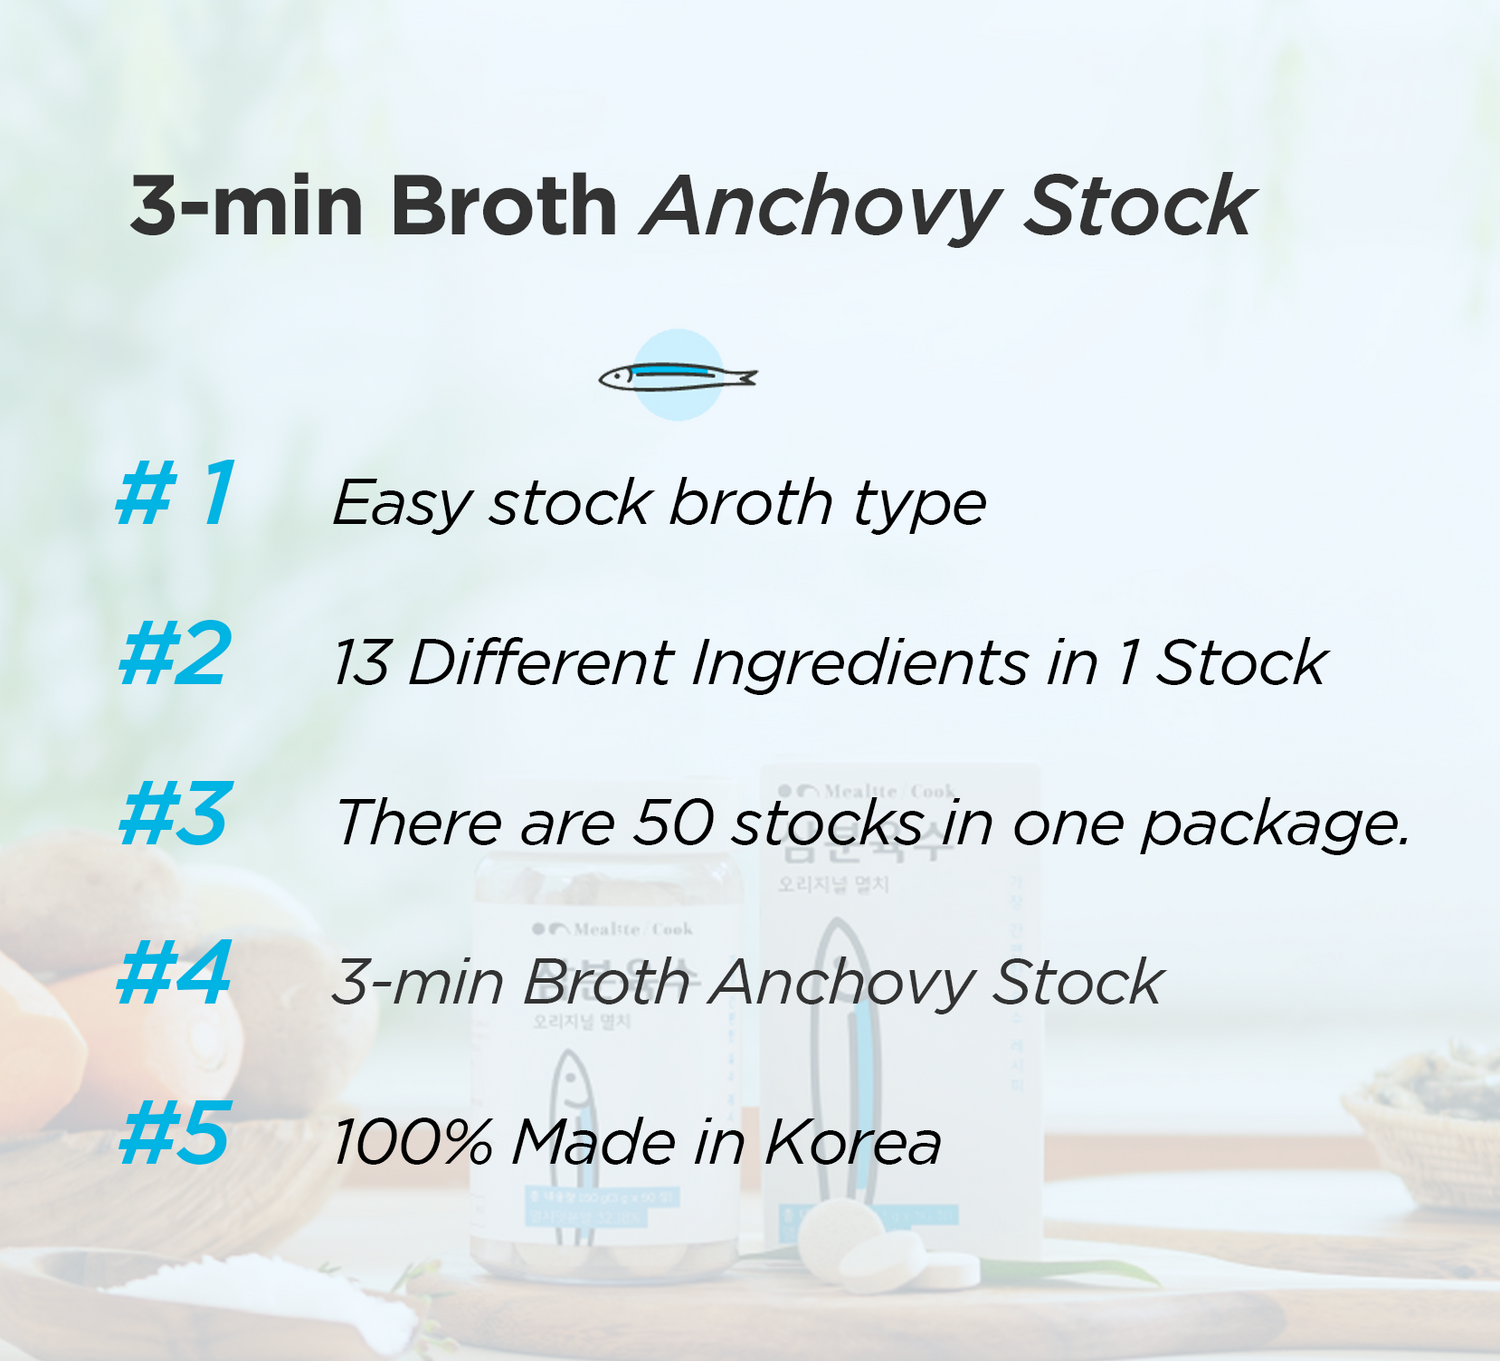 Anchovy Stock Description - Easy, Quick, Convenient, 100% Made in Korea